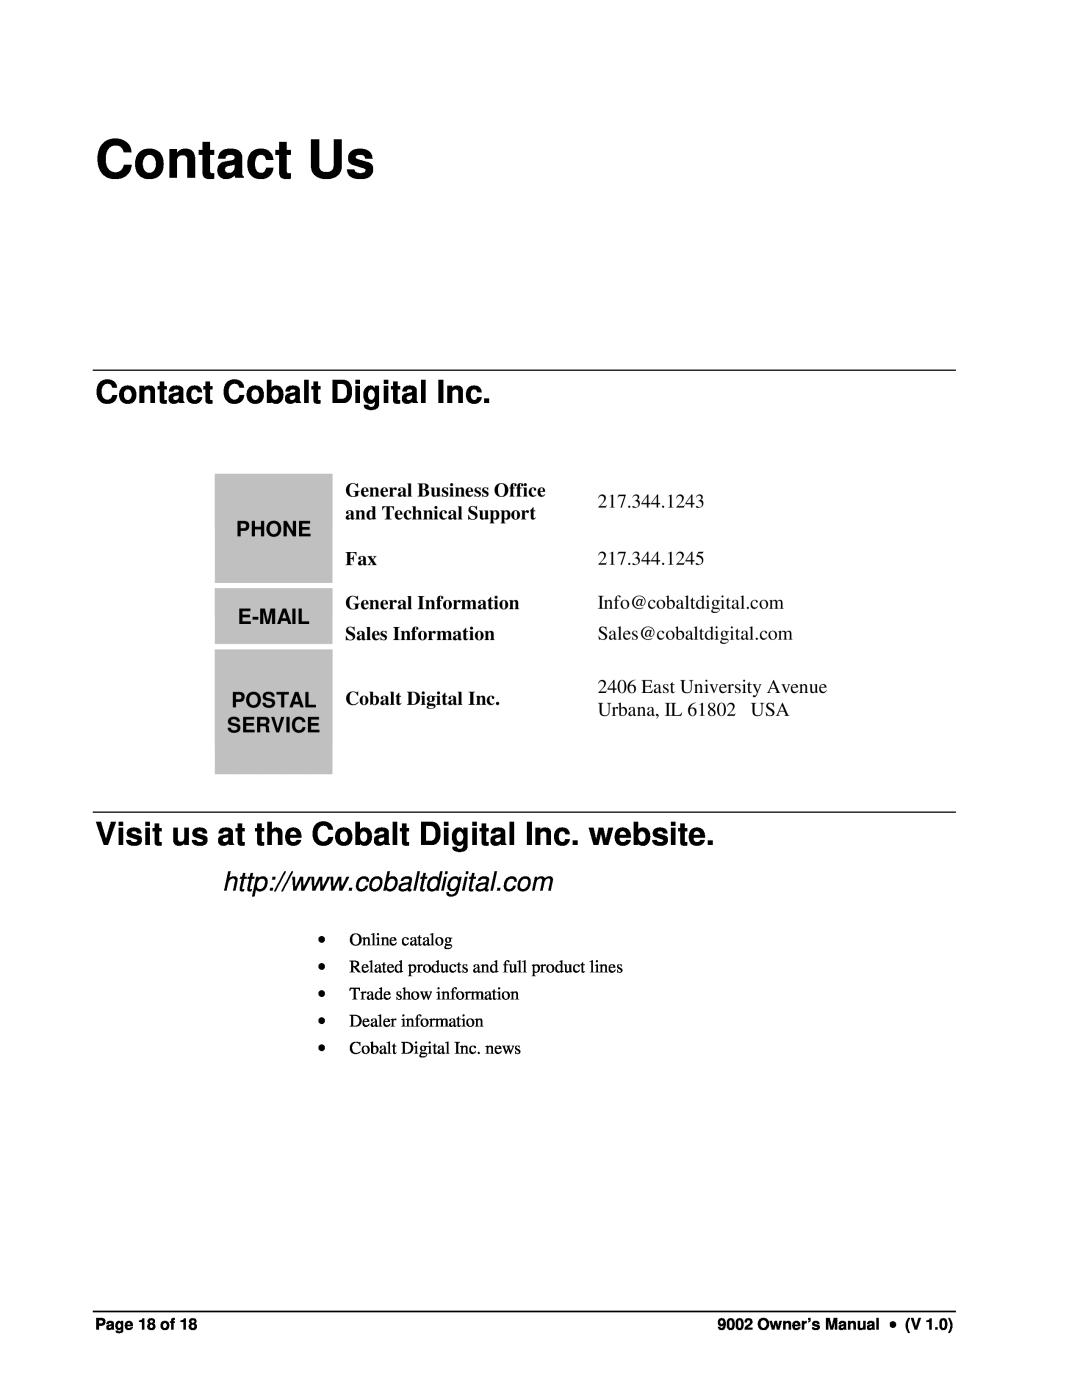 Cobalt Networks 9002 Contact Us, Contact Cobalt Digital Inc, Visit us at the Cobalt Digital Inc. website, Service 